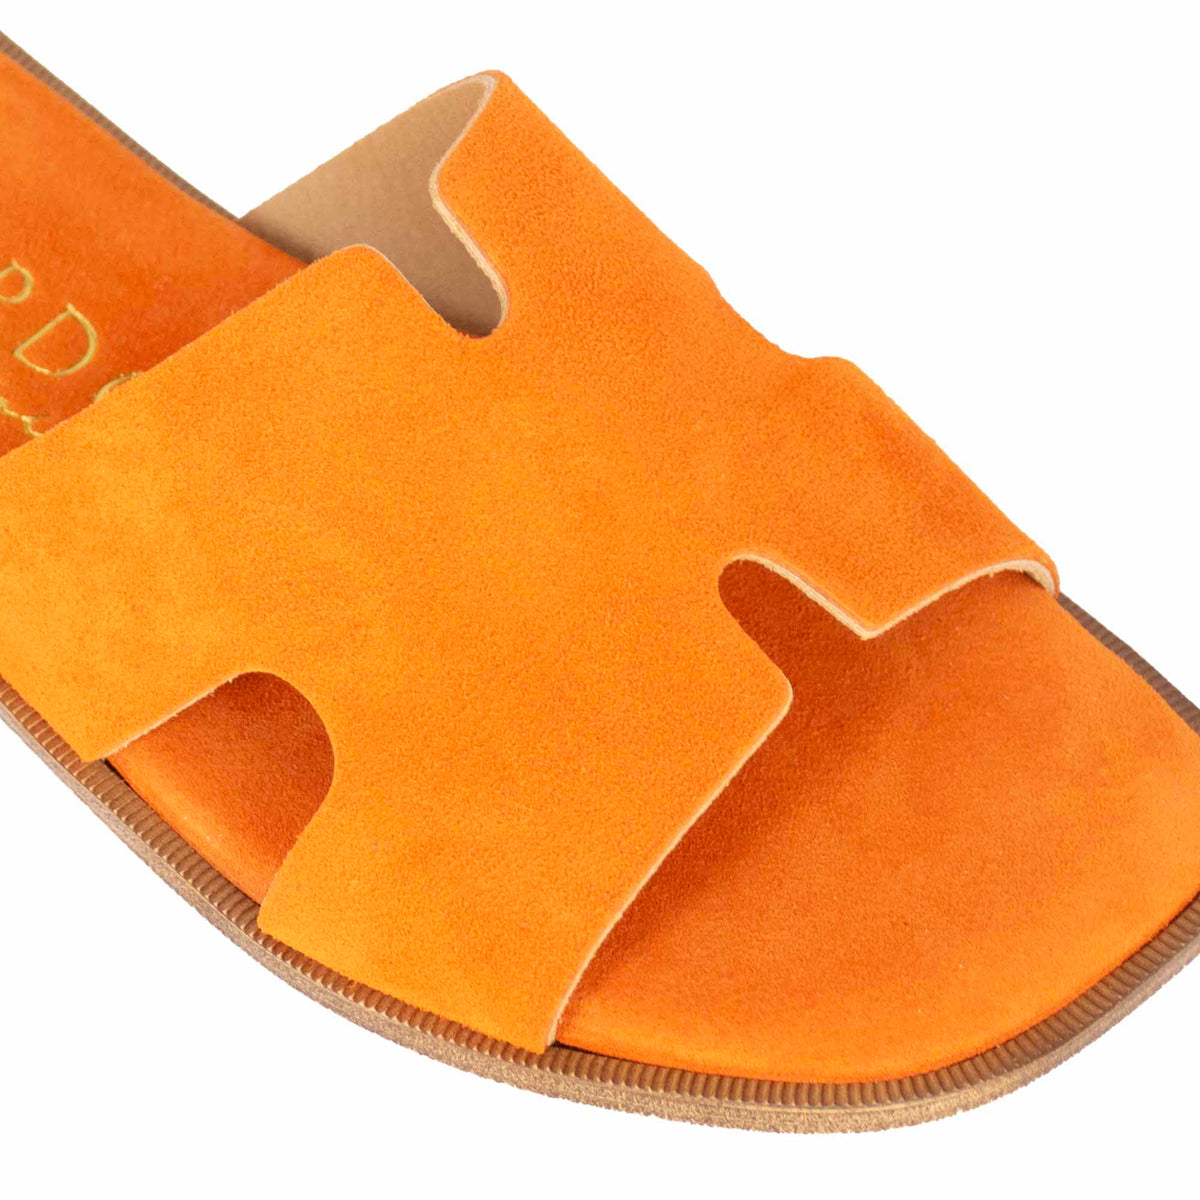 Women's orange suede slippers